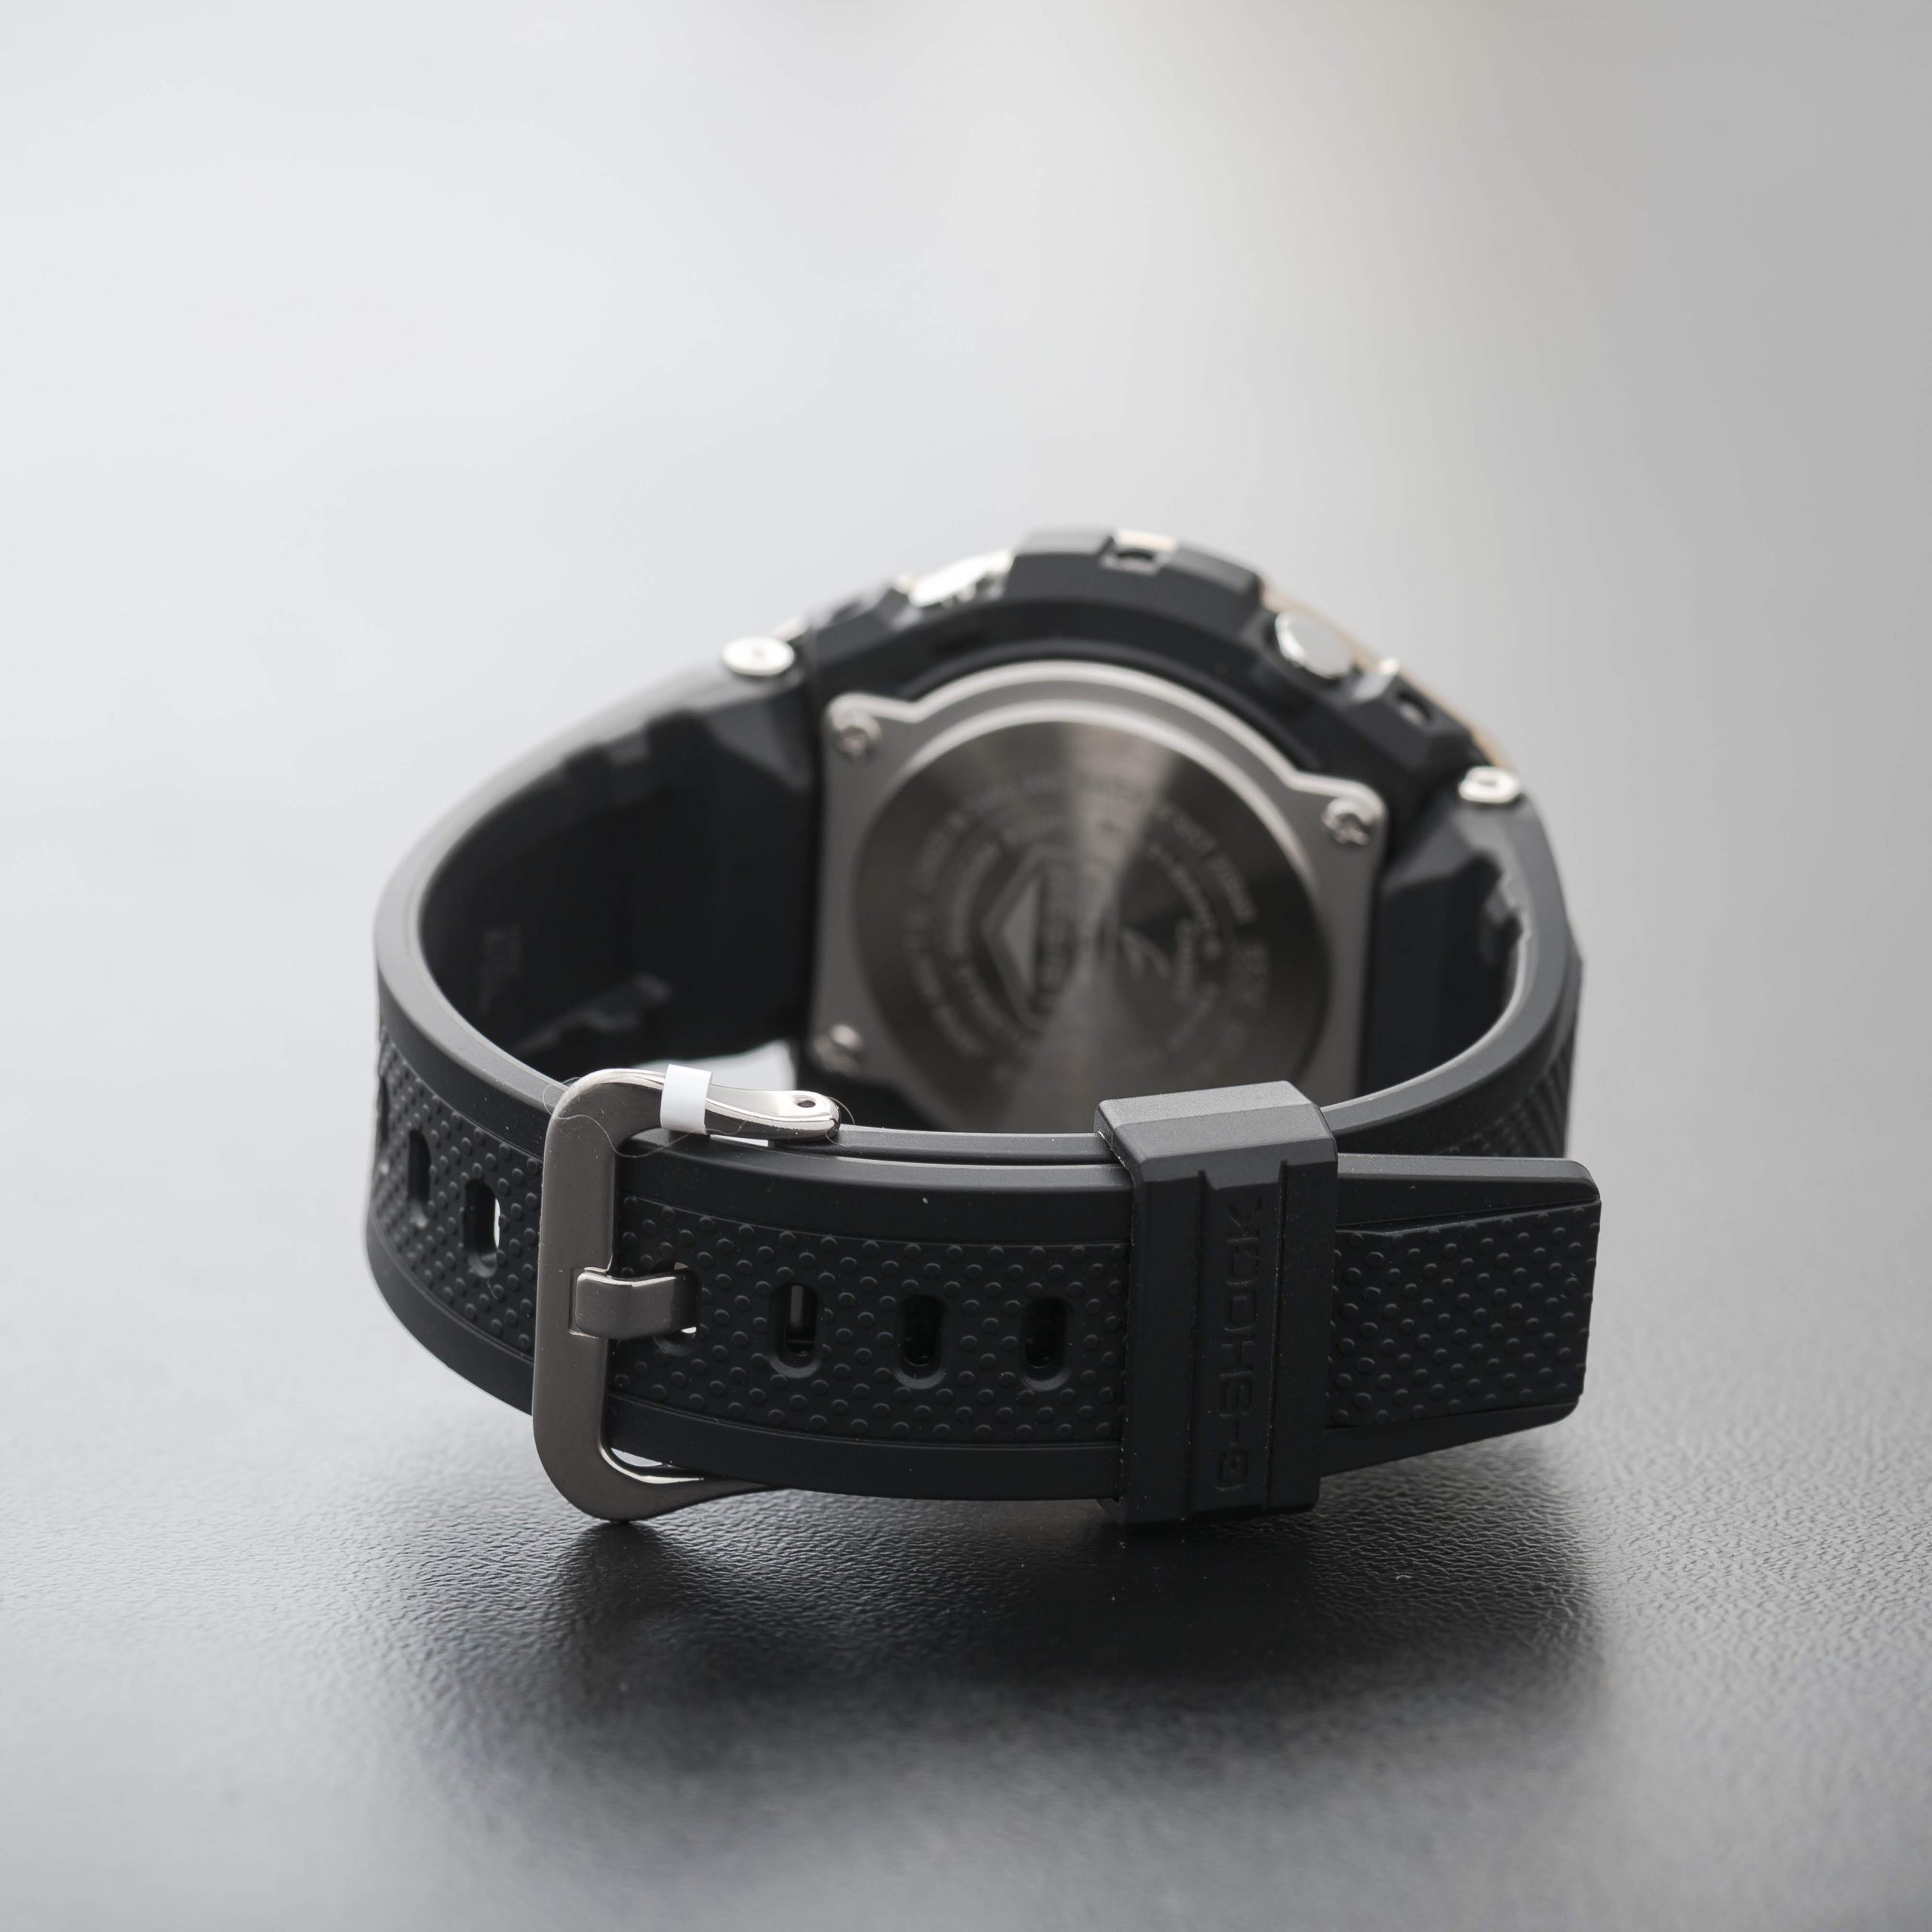 Casio G-Steel Midsize Alarm Chronograph Radio Controlled Watch GST-W300G-1A9ER